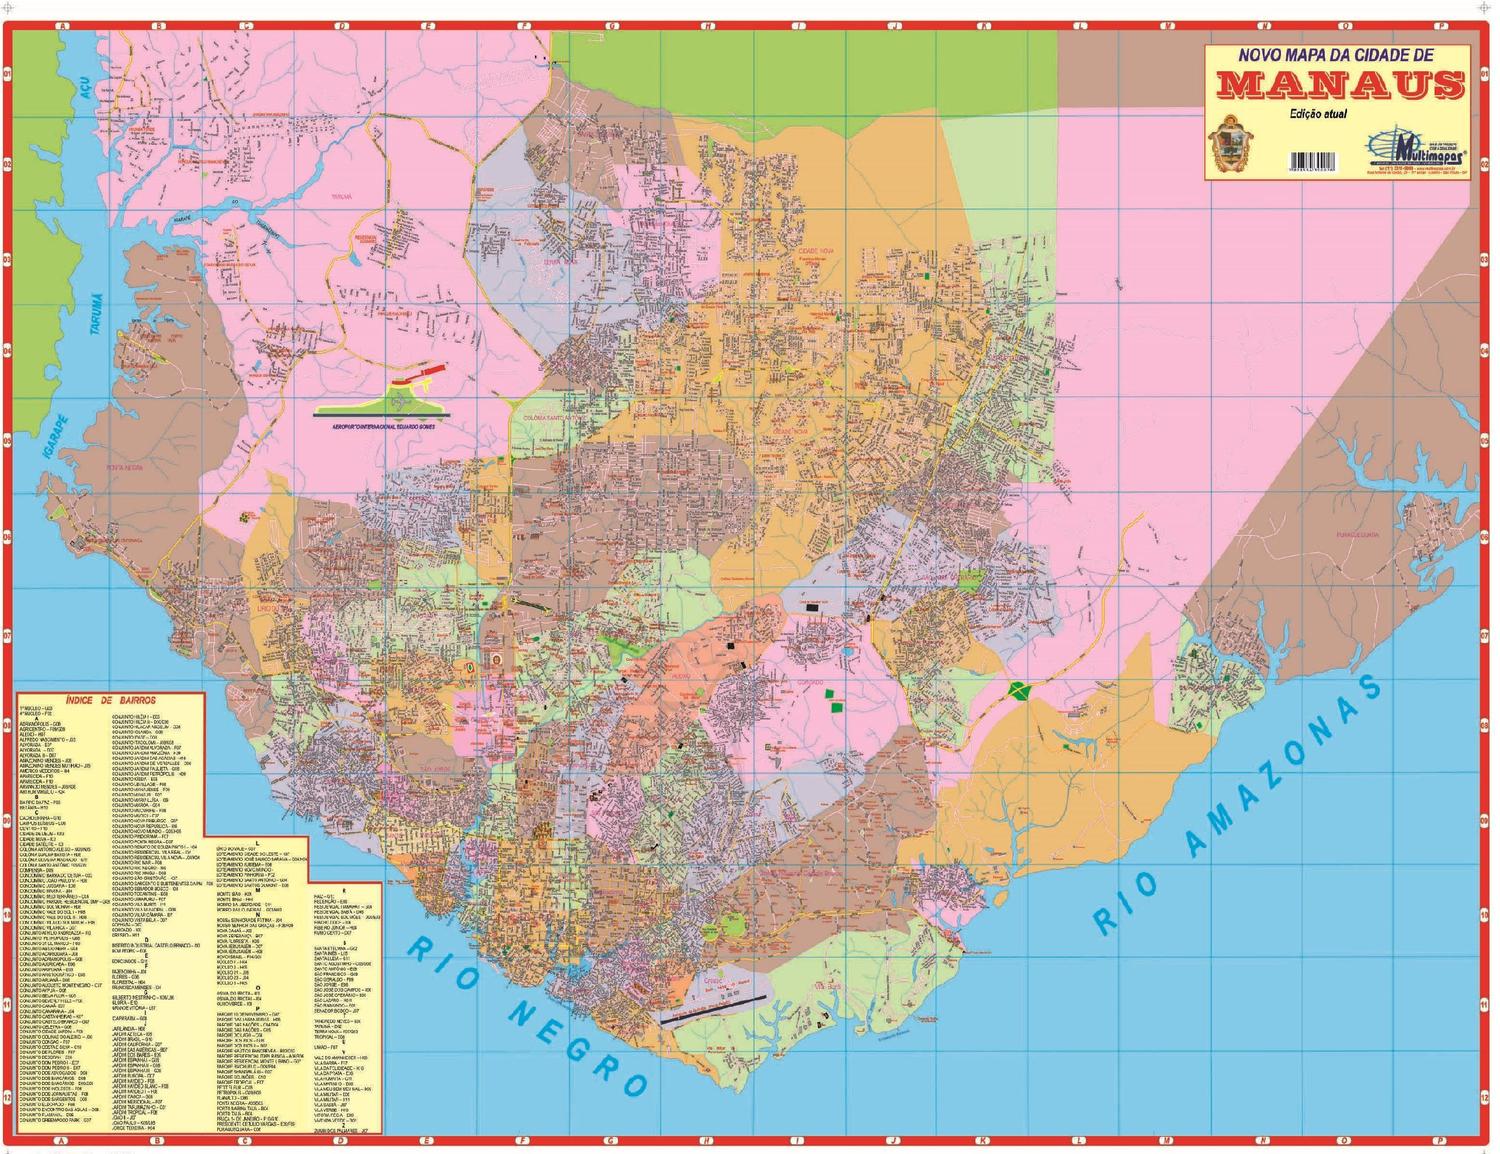 Mapa Cidade De Manaus Politico Escolar Poster Cidade Multimapas Livros De Historia E Geografia Magazine Luiza